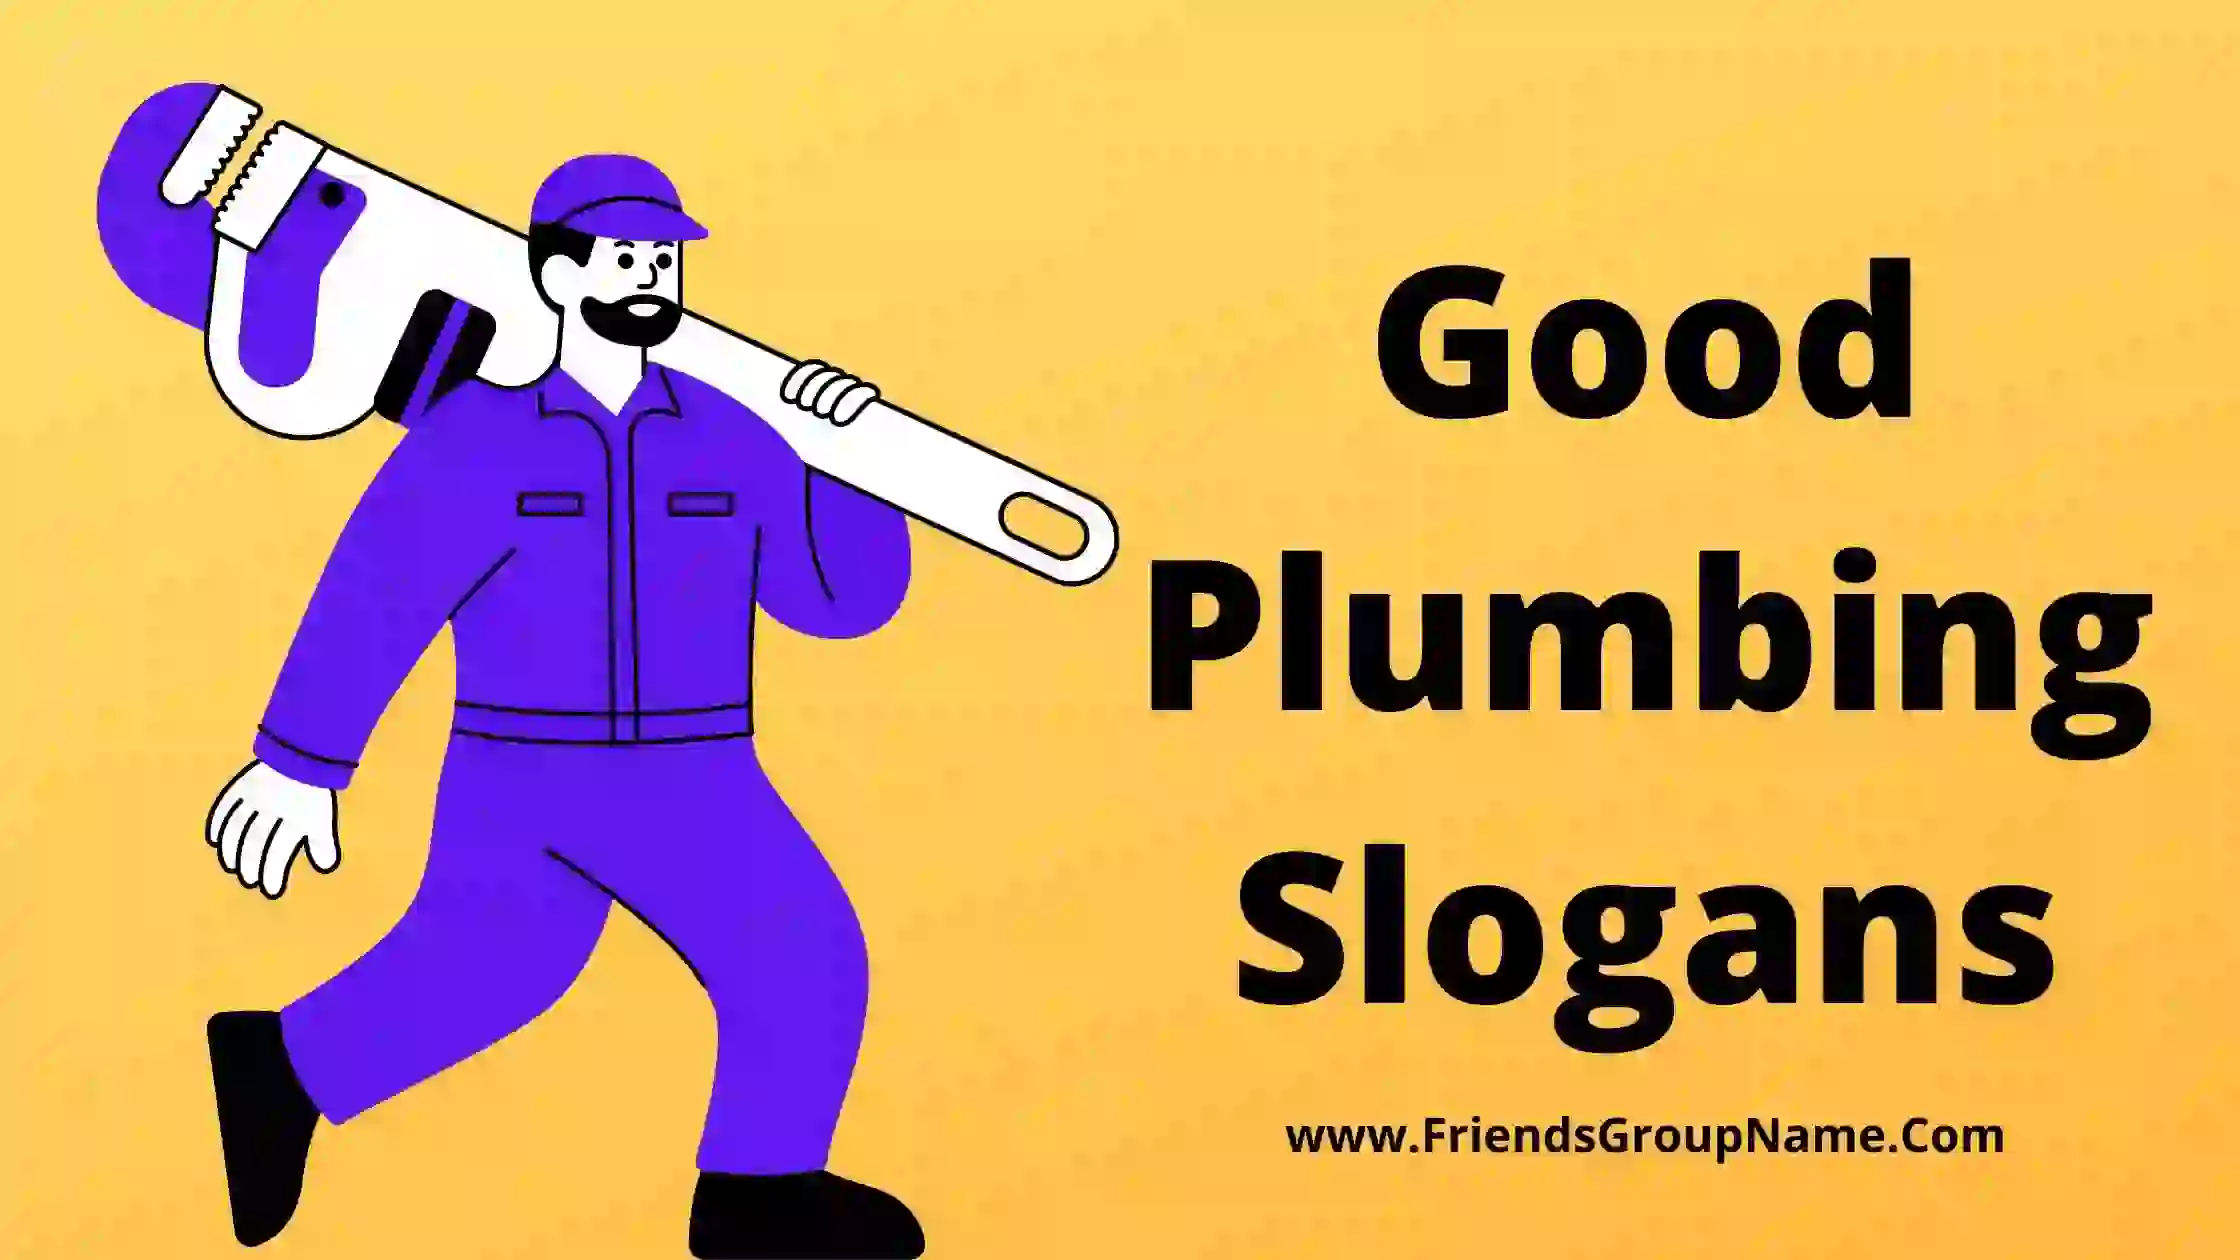 Good Plumbing Slogans